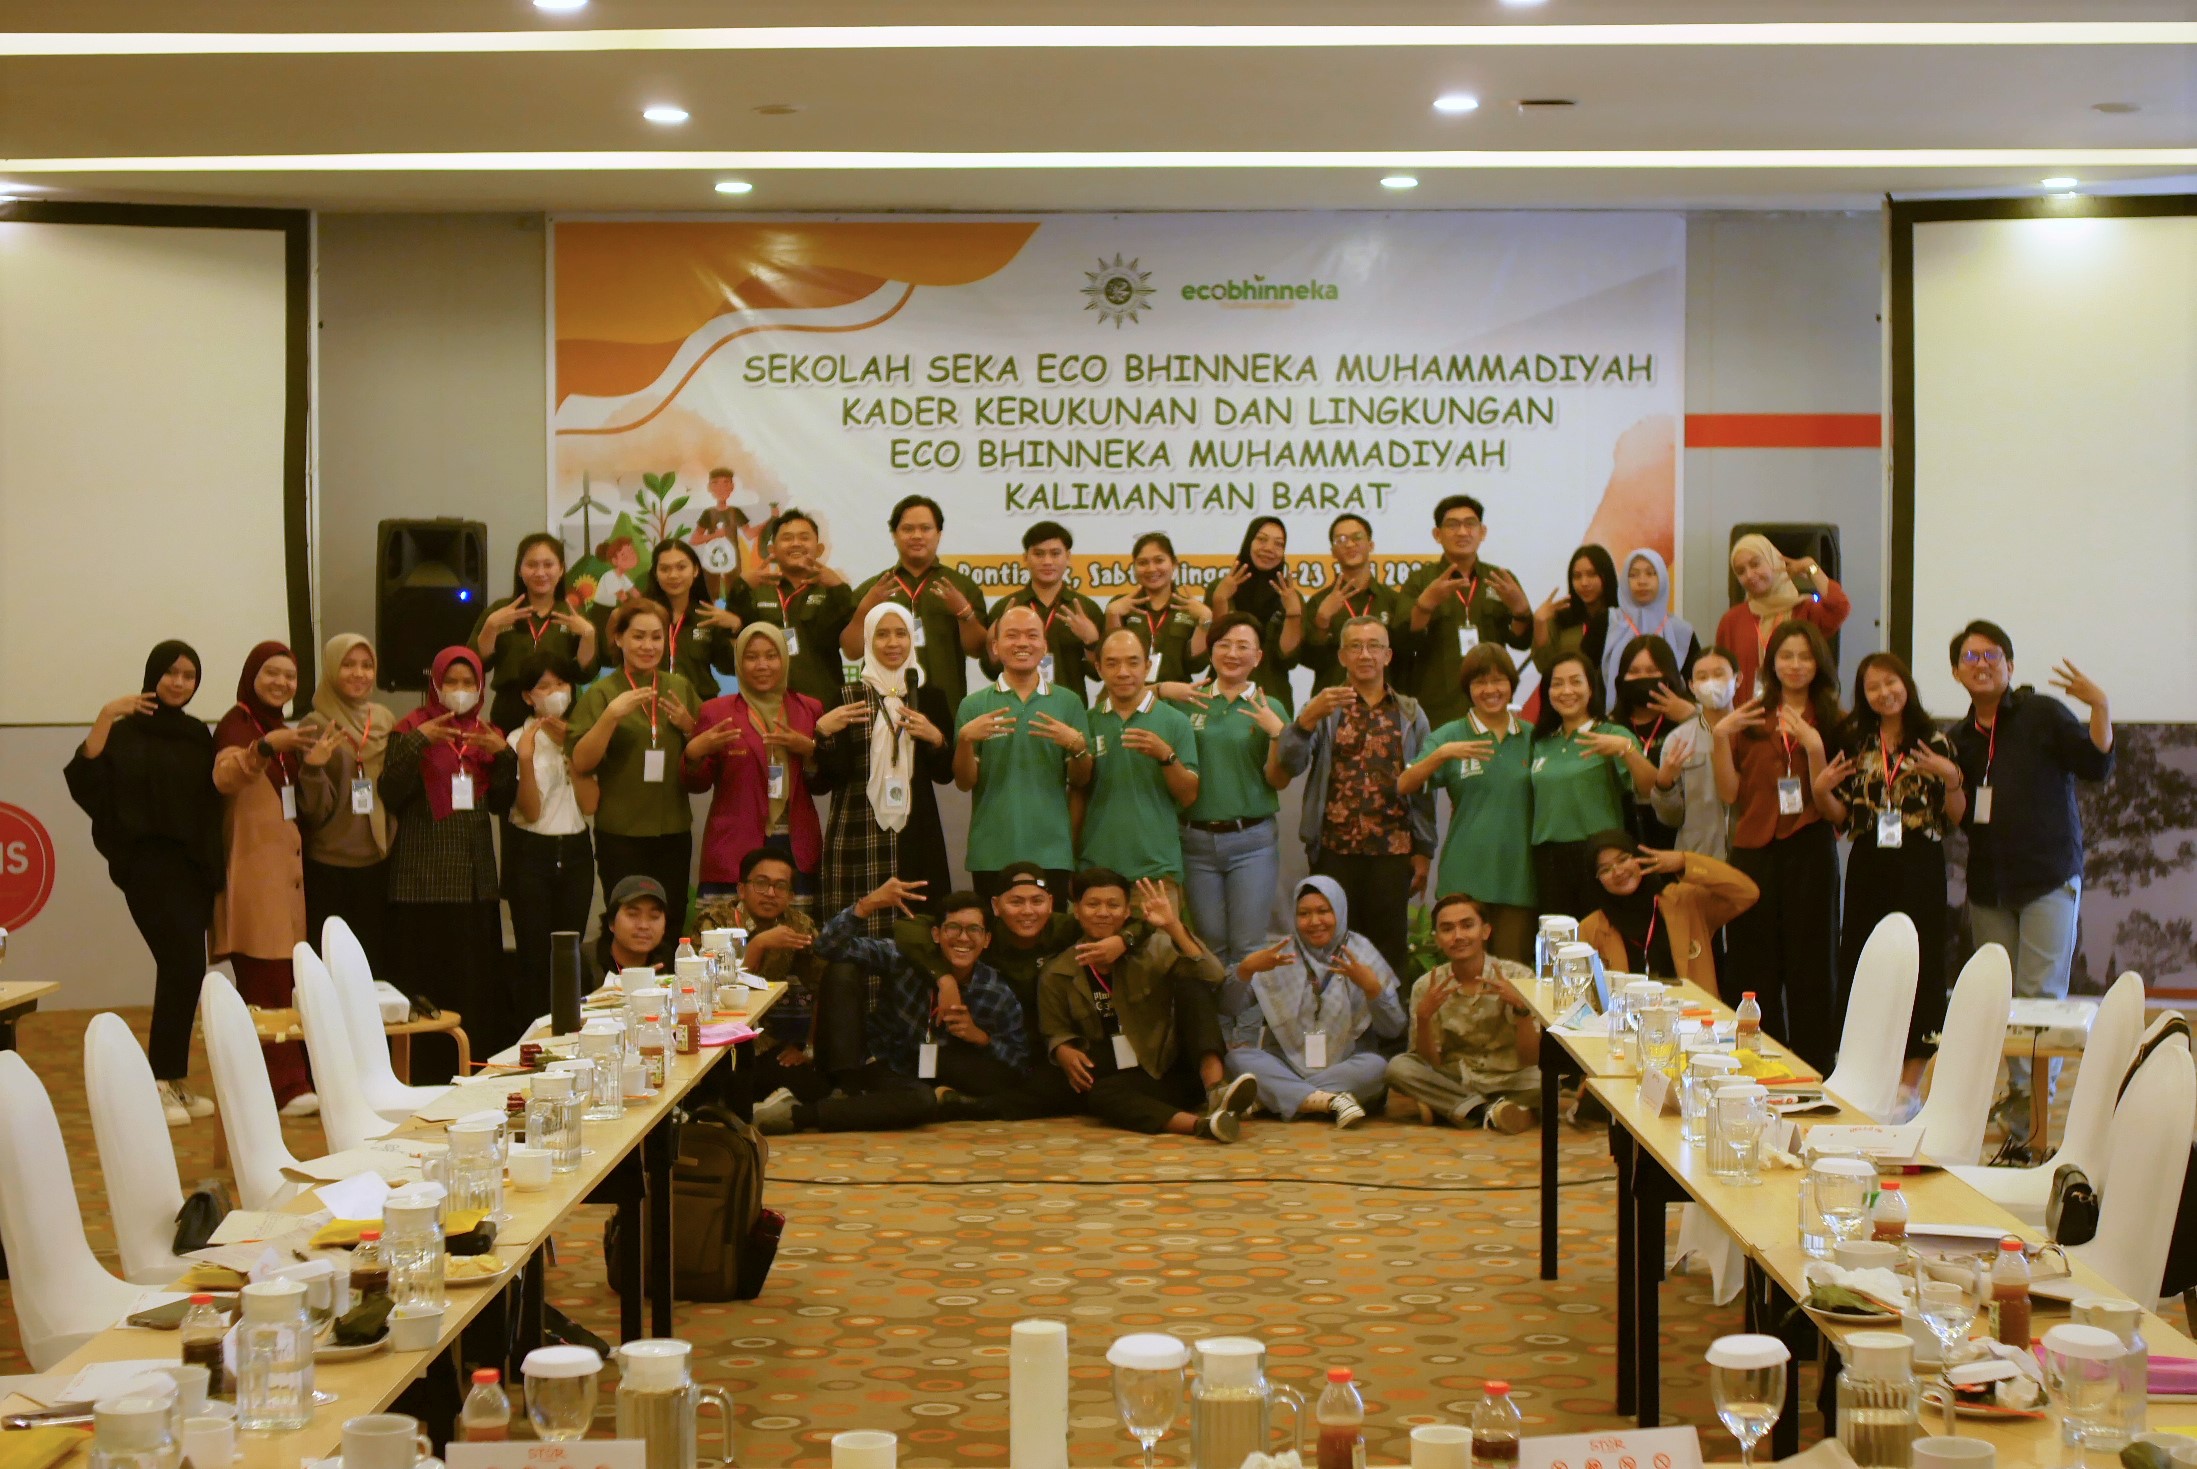 SEKA Muhammadiyah Kalimantan Barat; Pengkaderan Sekolah ECO Bhineka untuk Merawat Kerukunan dan Lingkungan